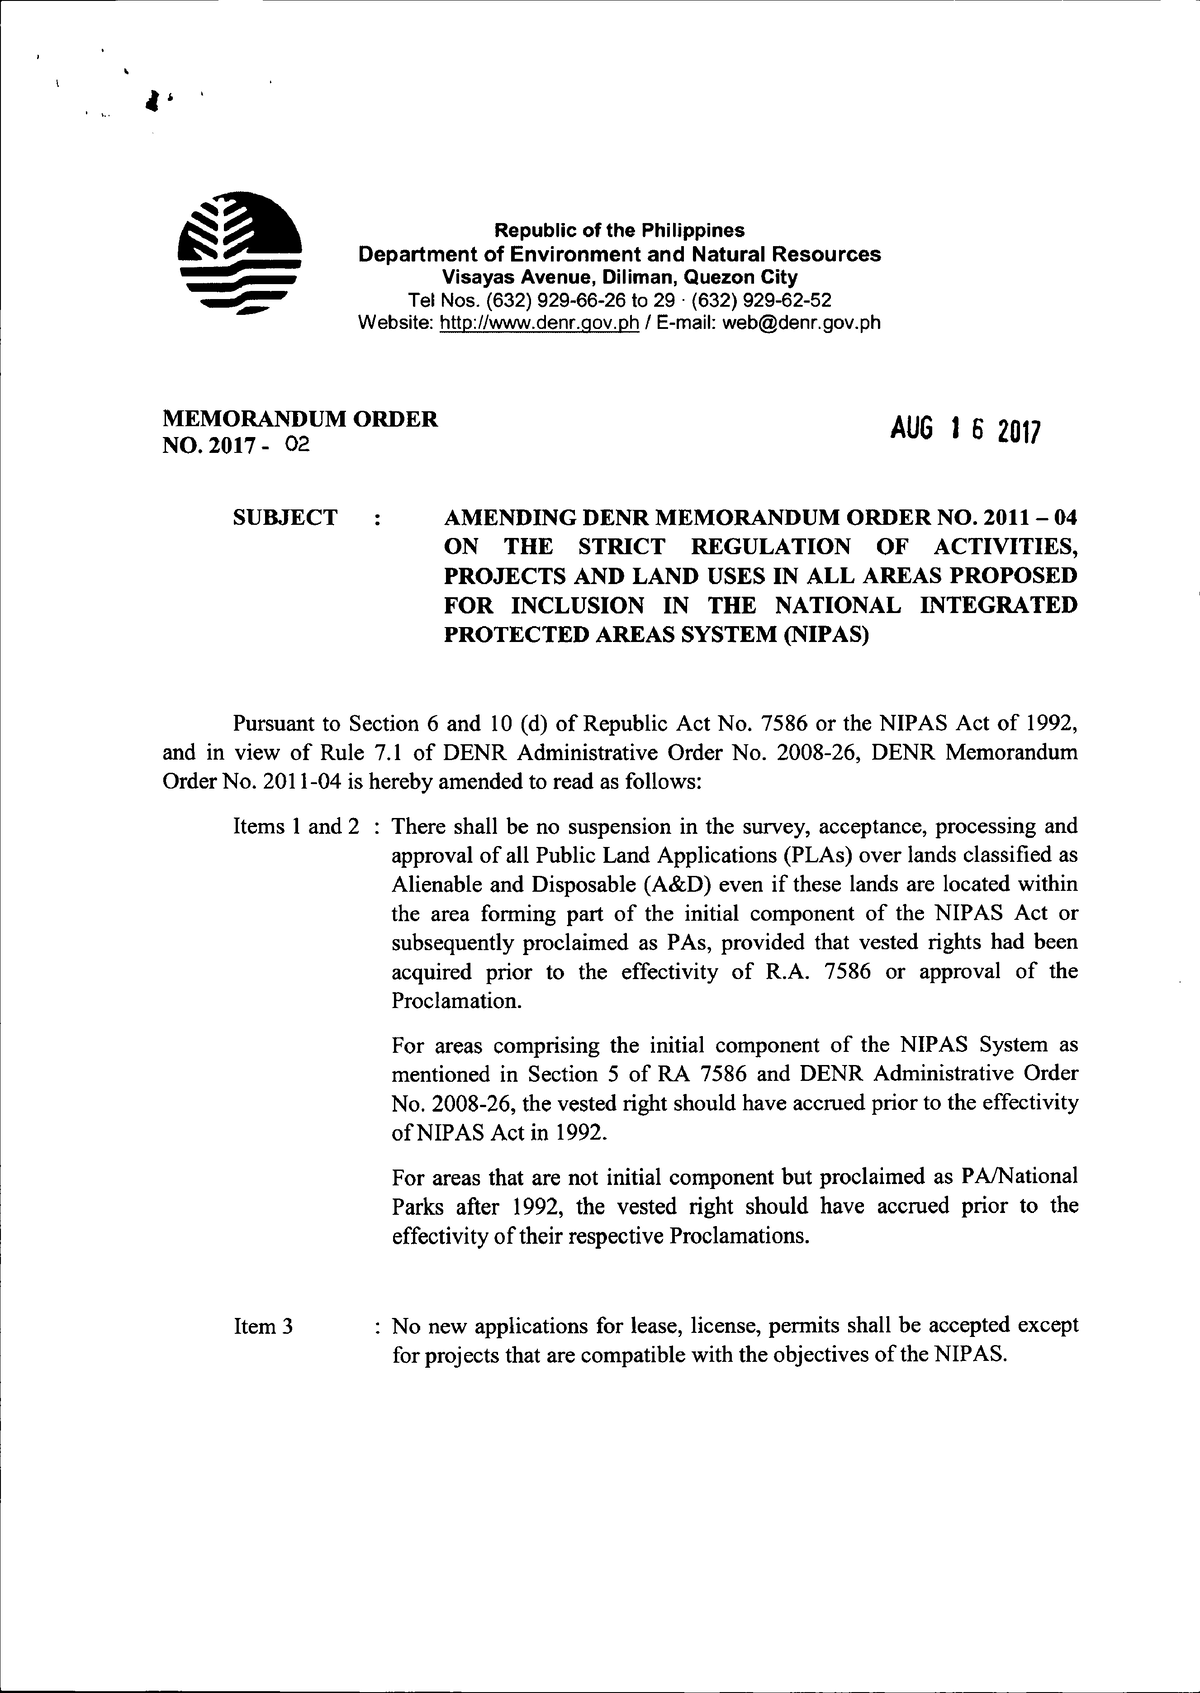 Amending DENR Memorandum Order NO 2011 04 ON THE Strict Regulation OF